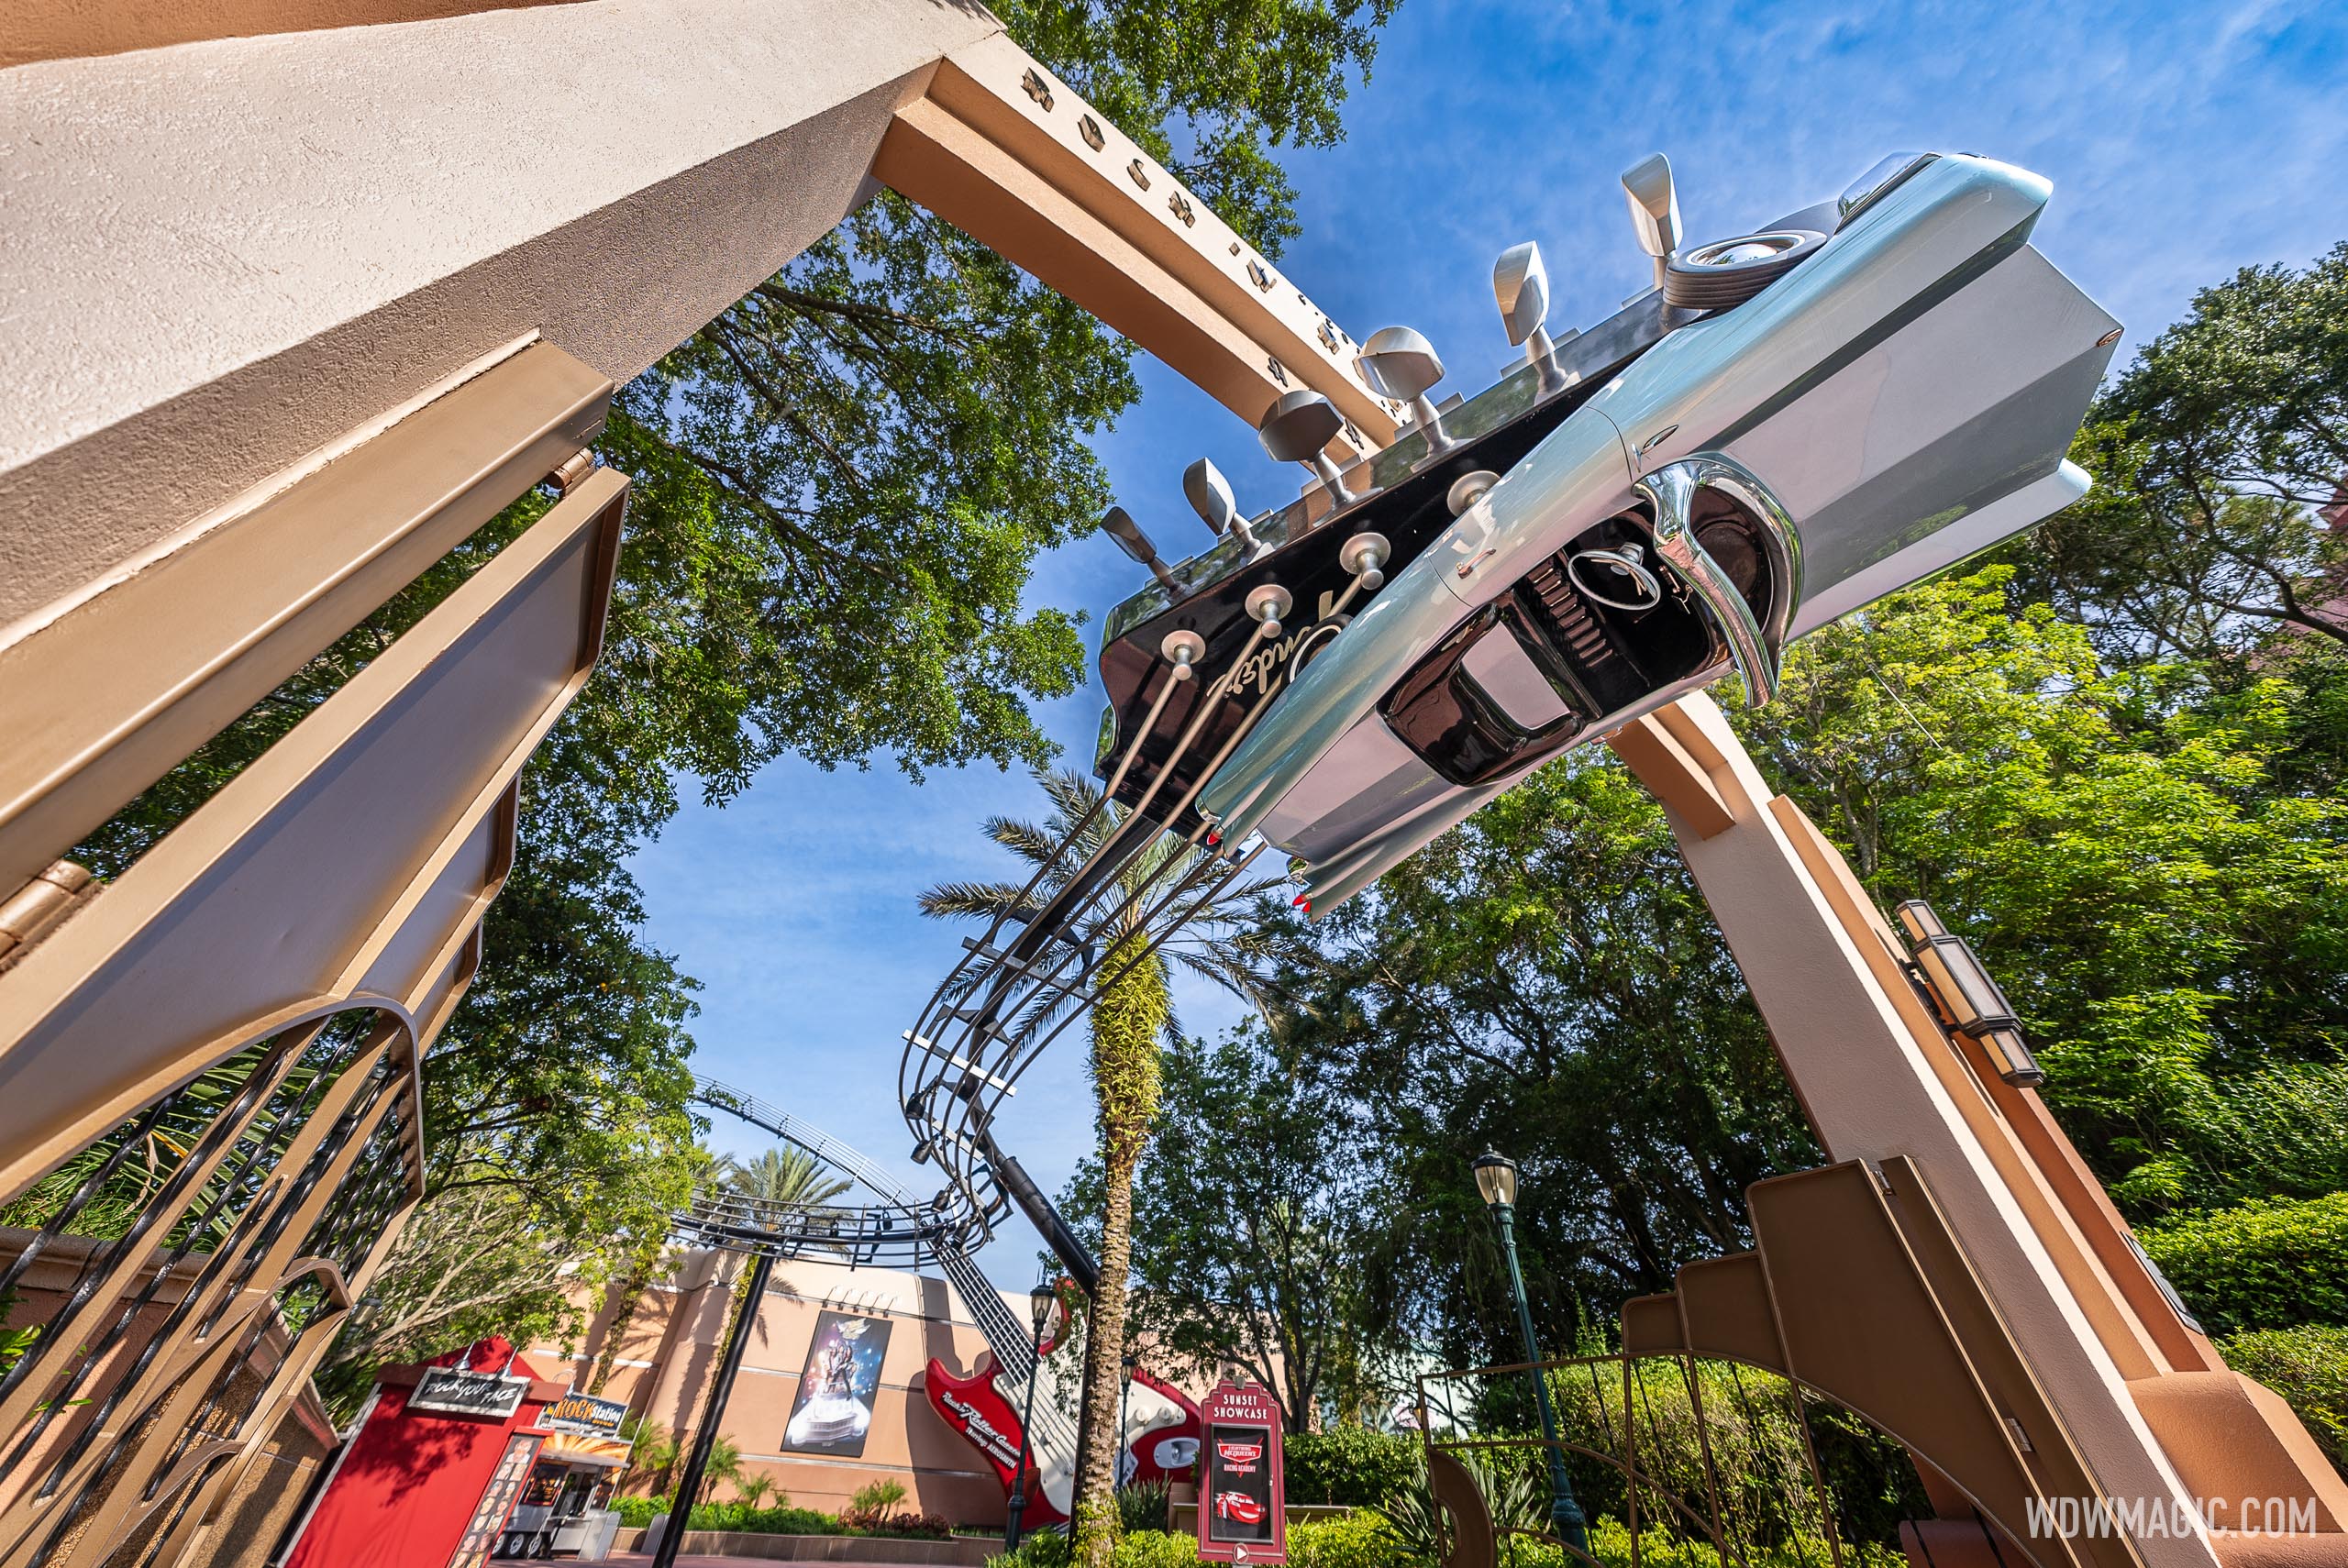 Disney provides update on Rock 'n' Roller Coaster refurbishment and